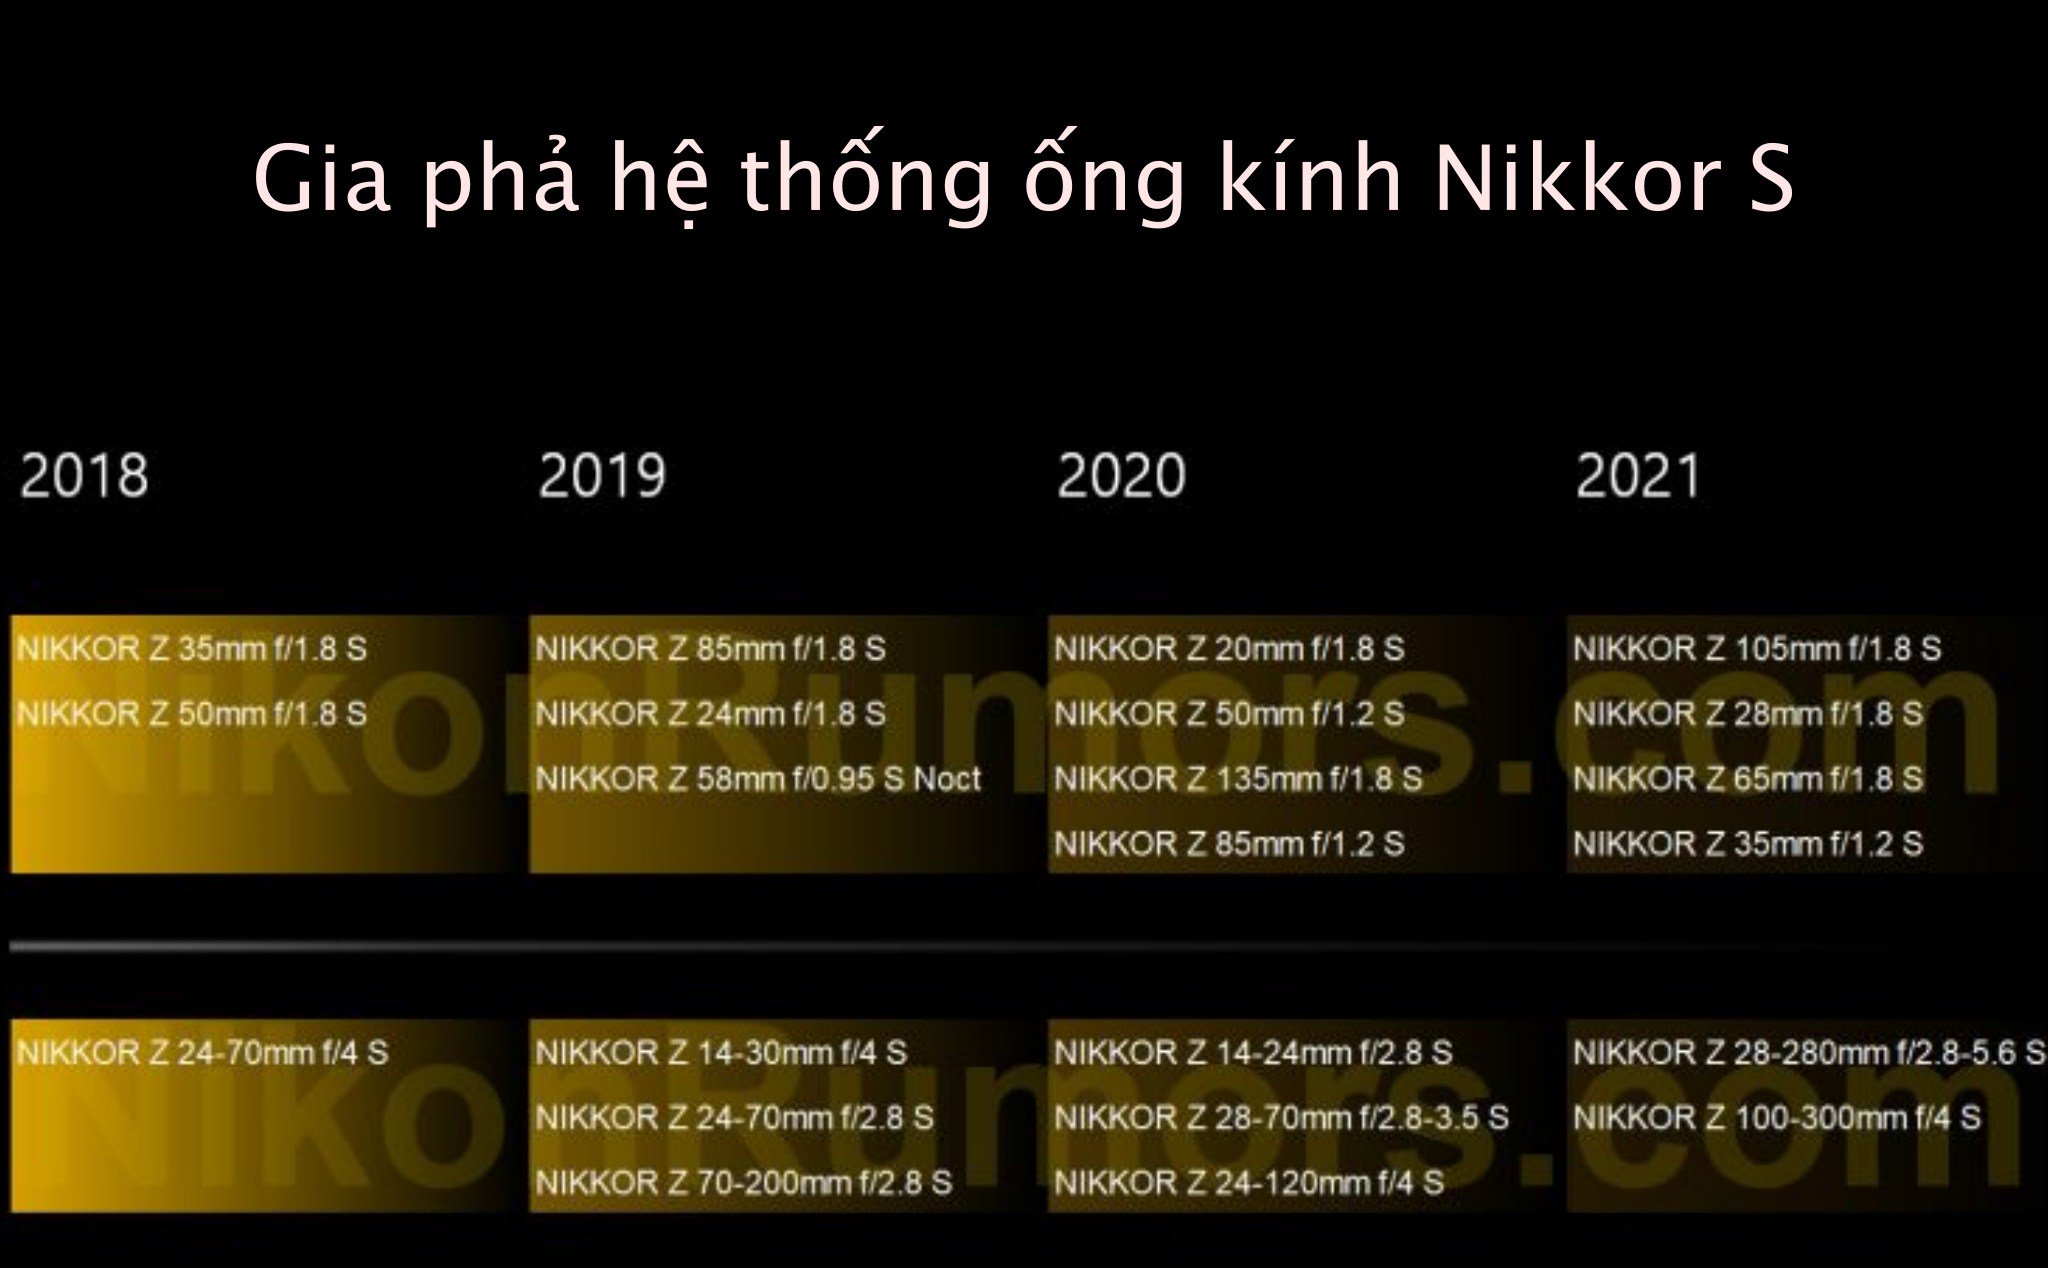 Lo_trinh_xay_dung_he_thong_ong_kinh_Nikkor_S-Line_cho_Nikon_ngam_Z___day_du_va_chat_luong